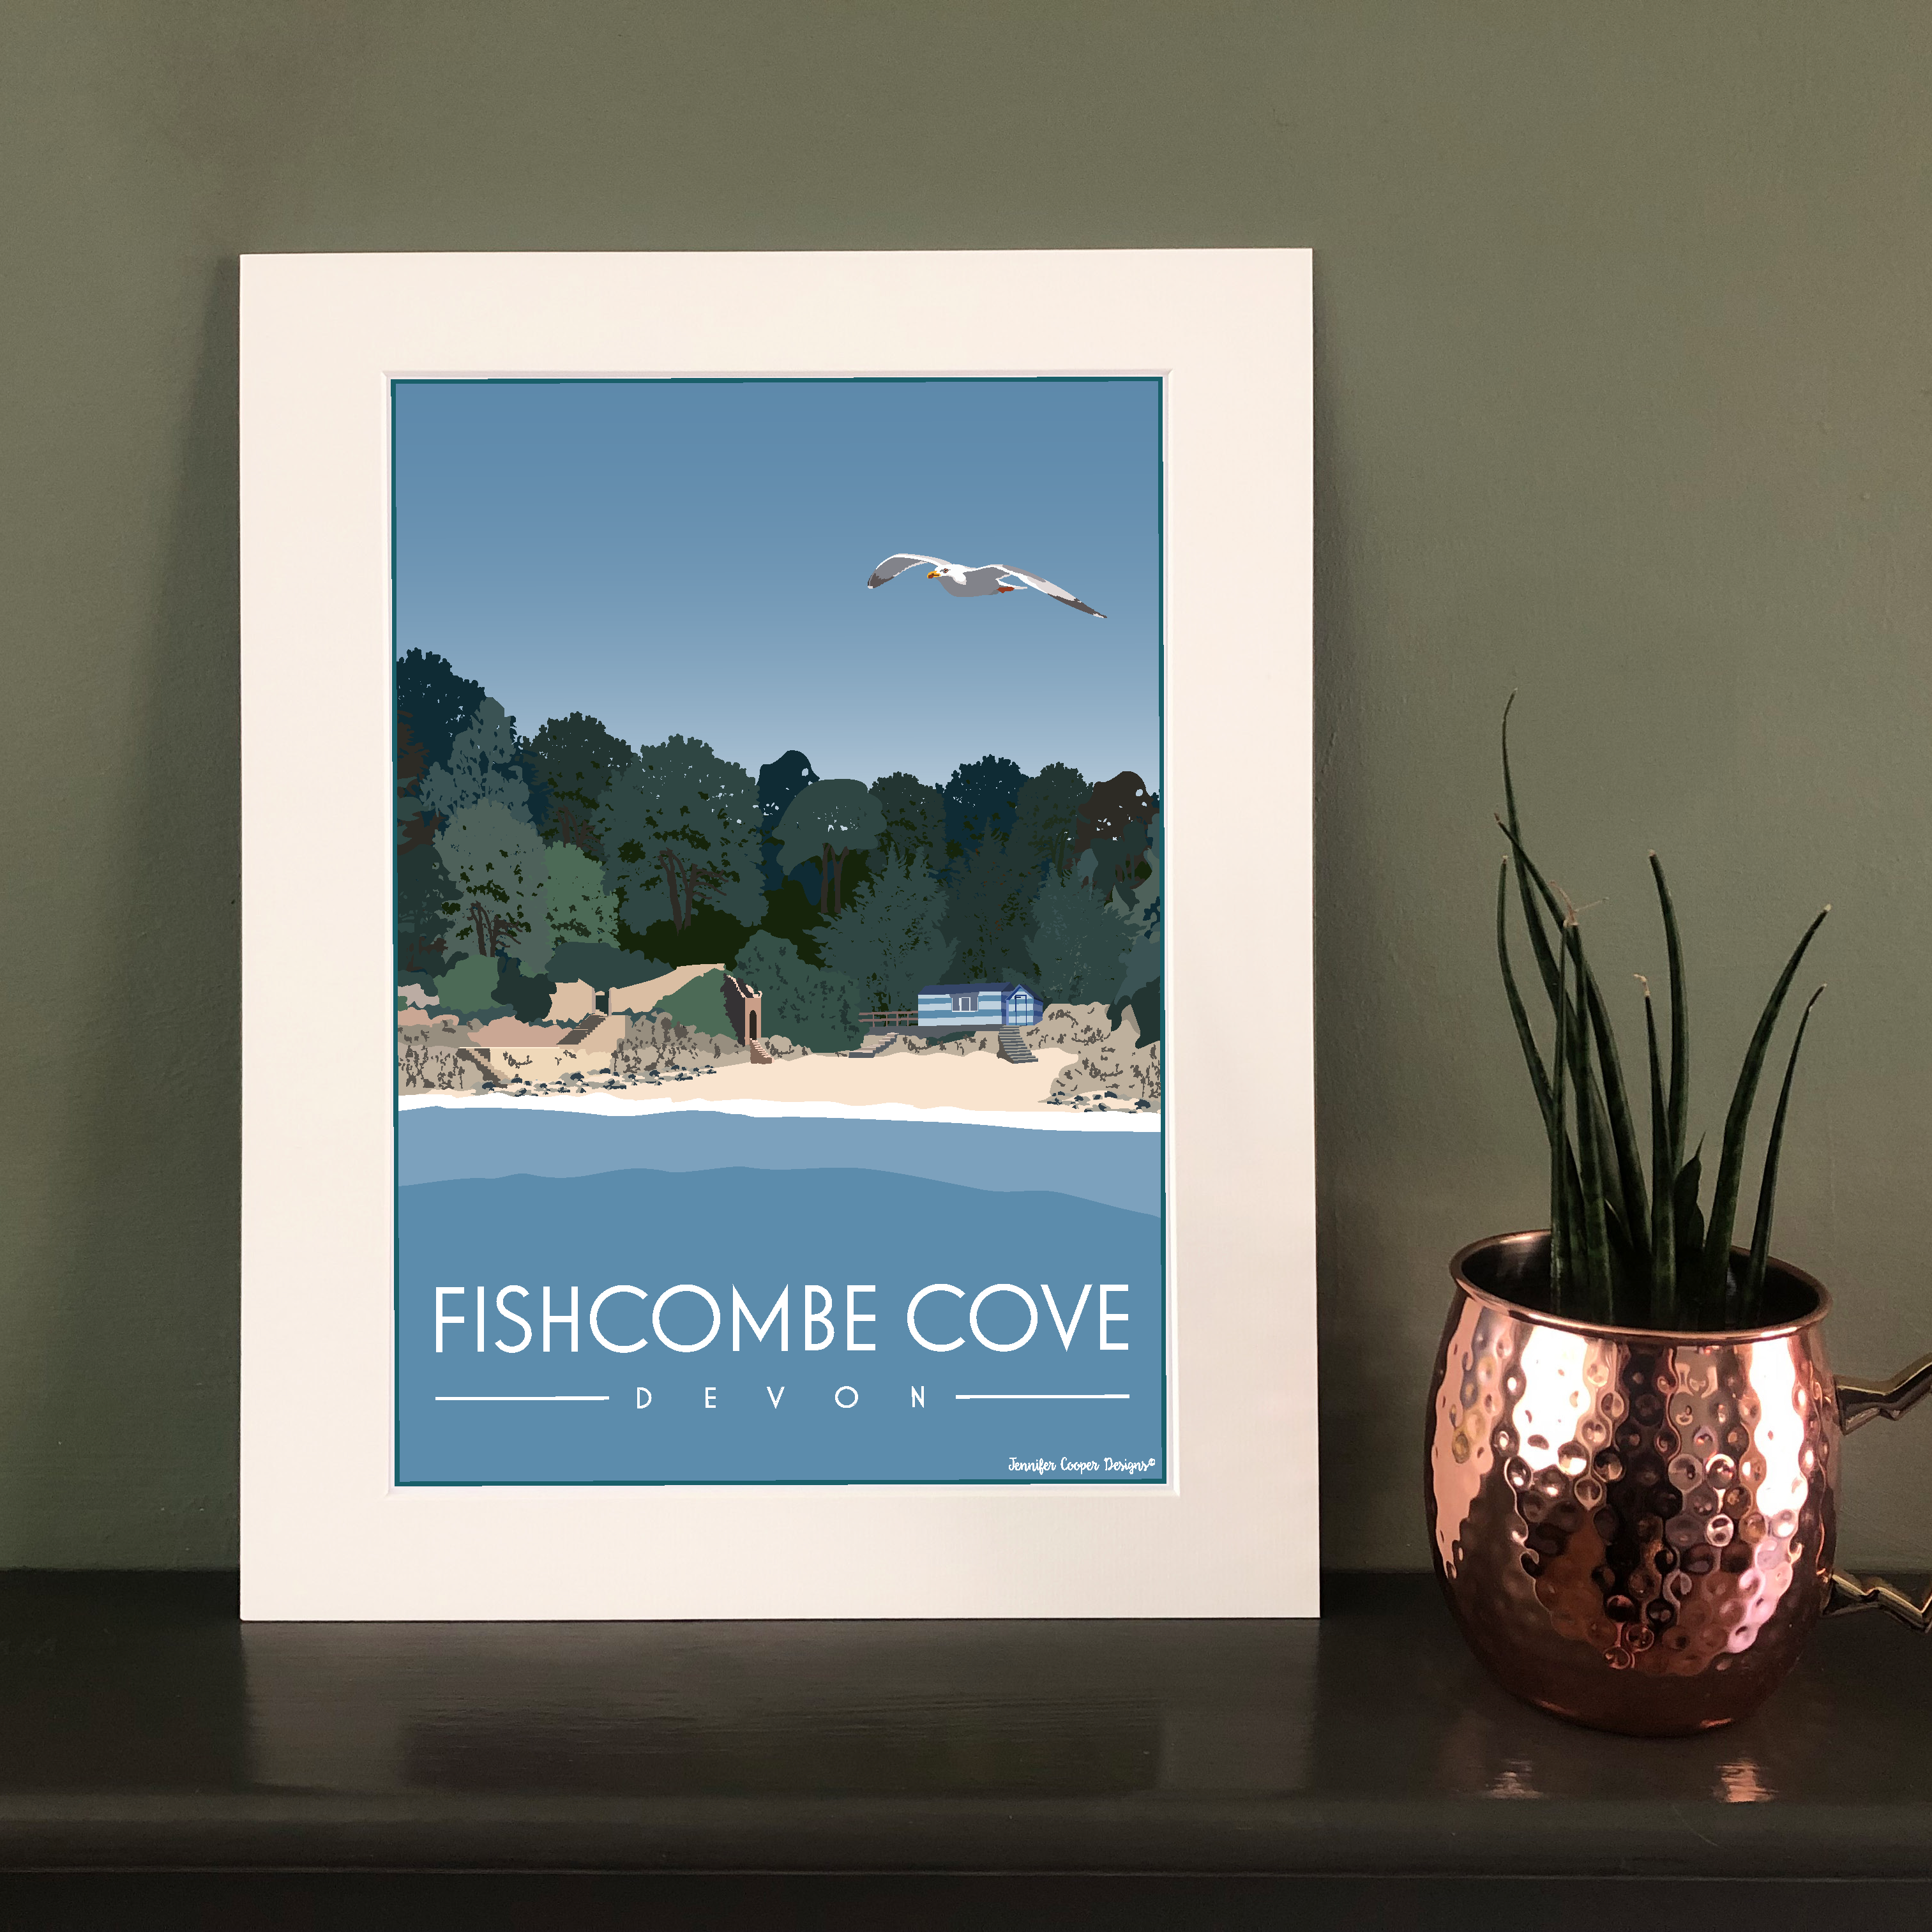 Fishcombe Cove